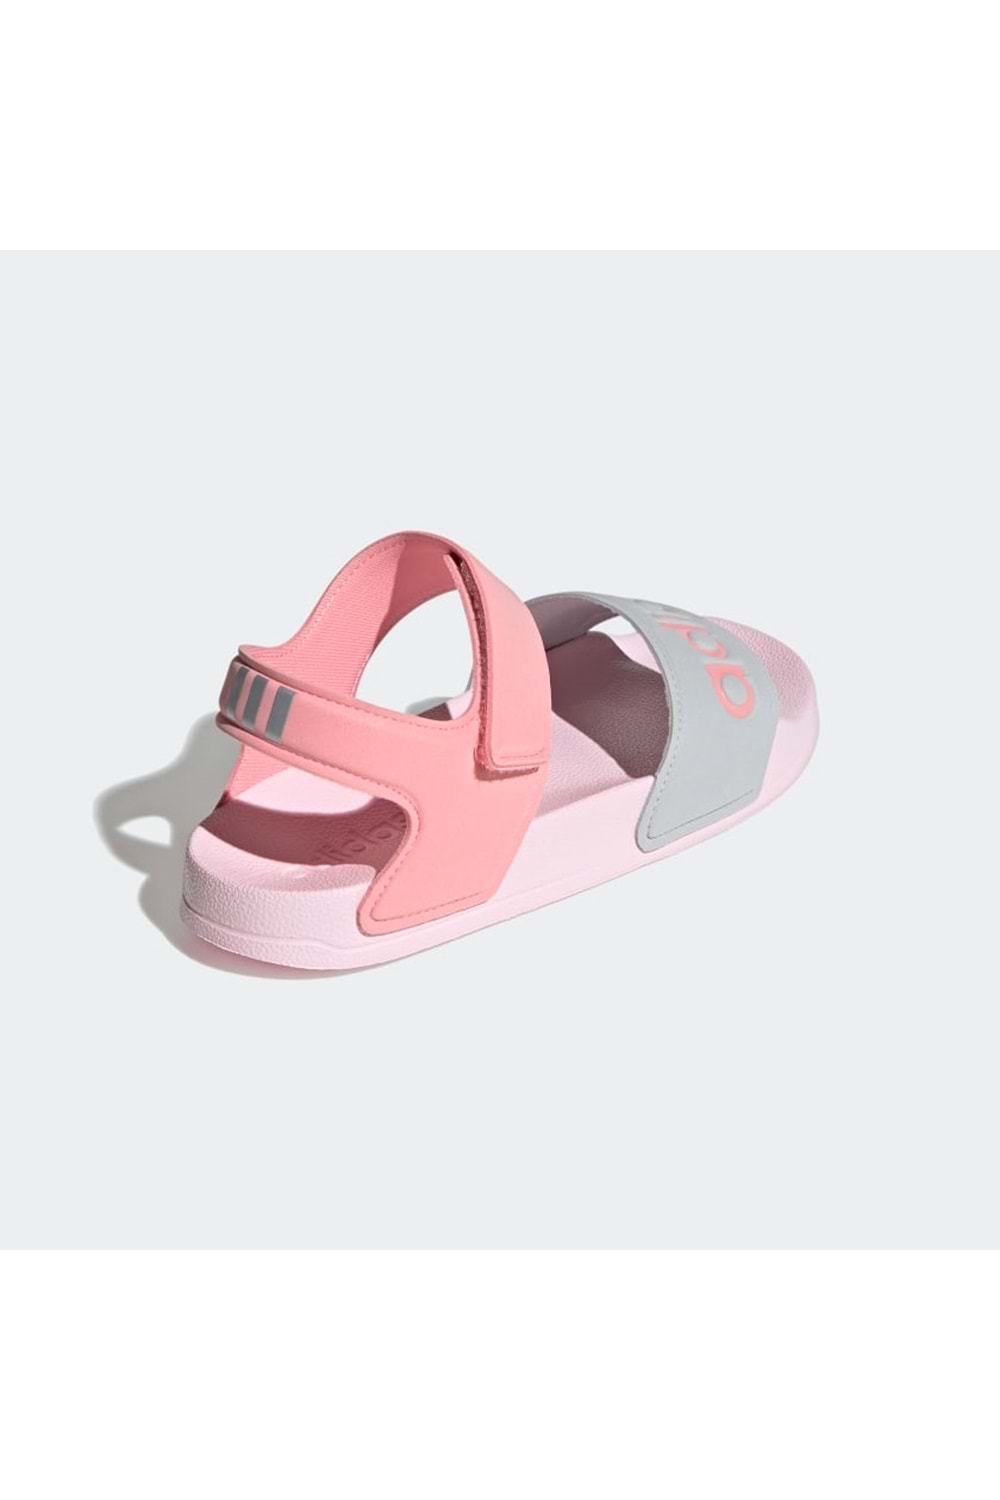 Adidas Adilette Sandal K Çocuk Sandalet FY8849